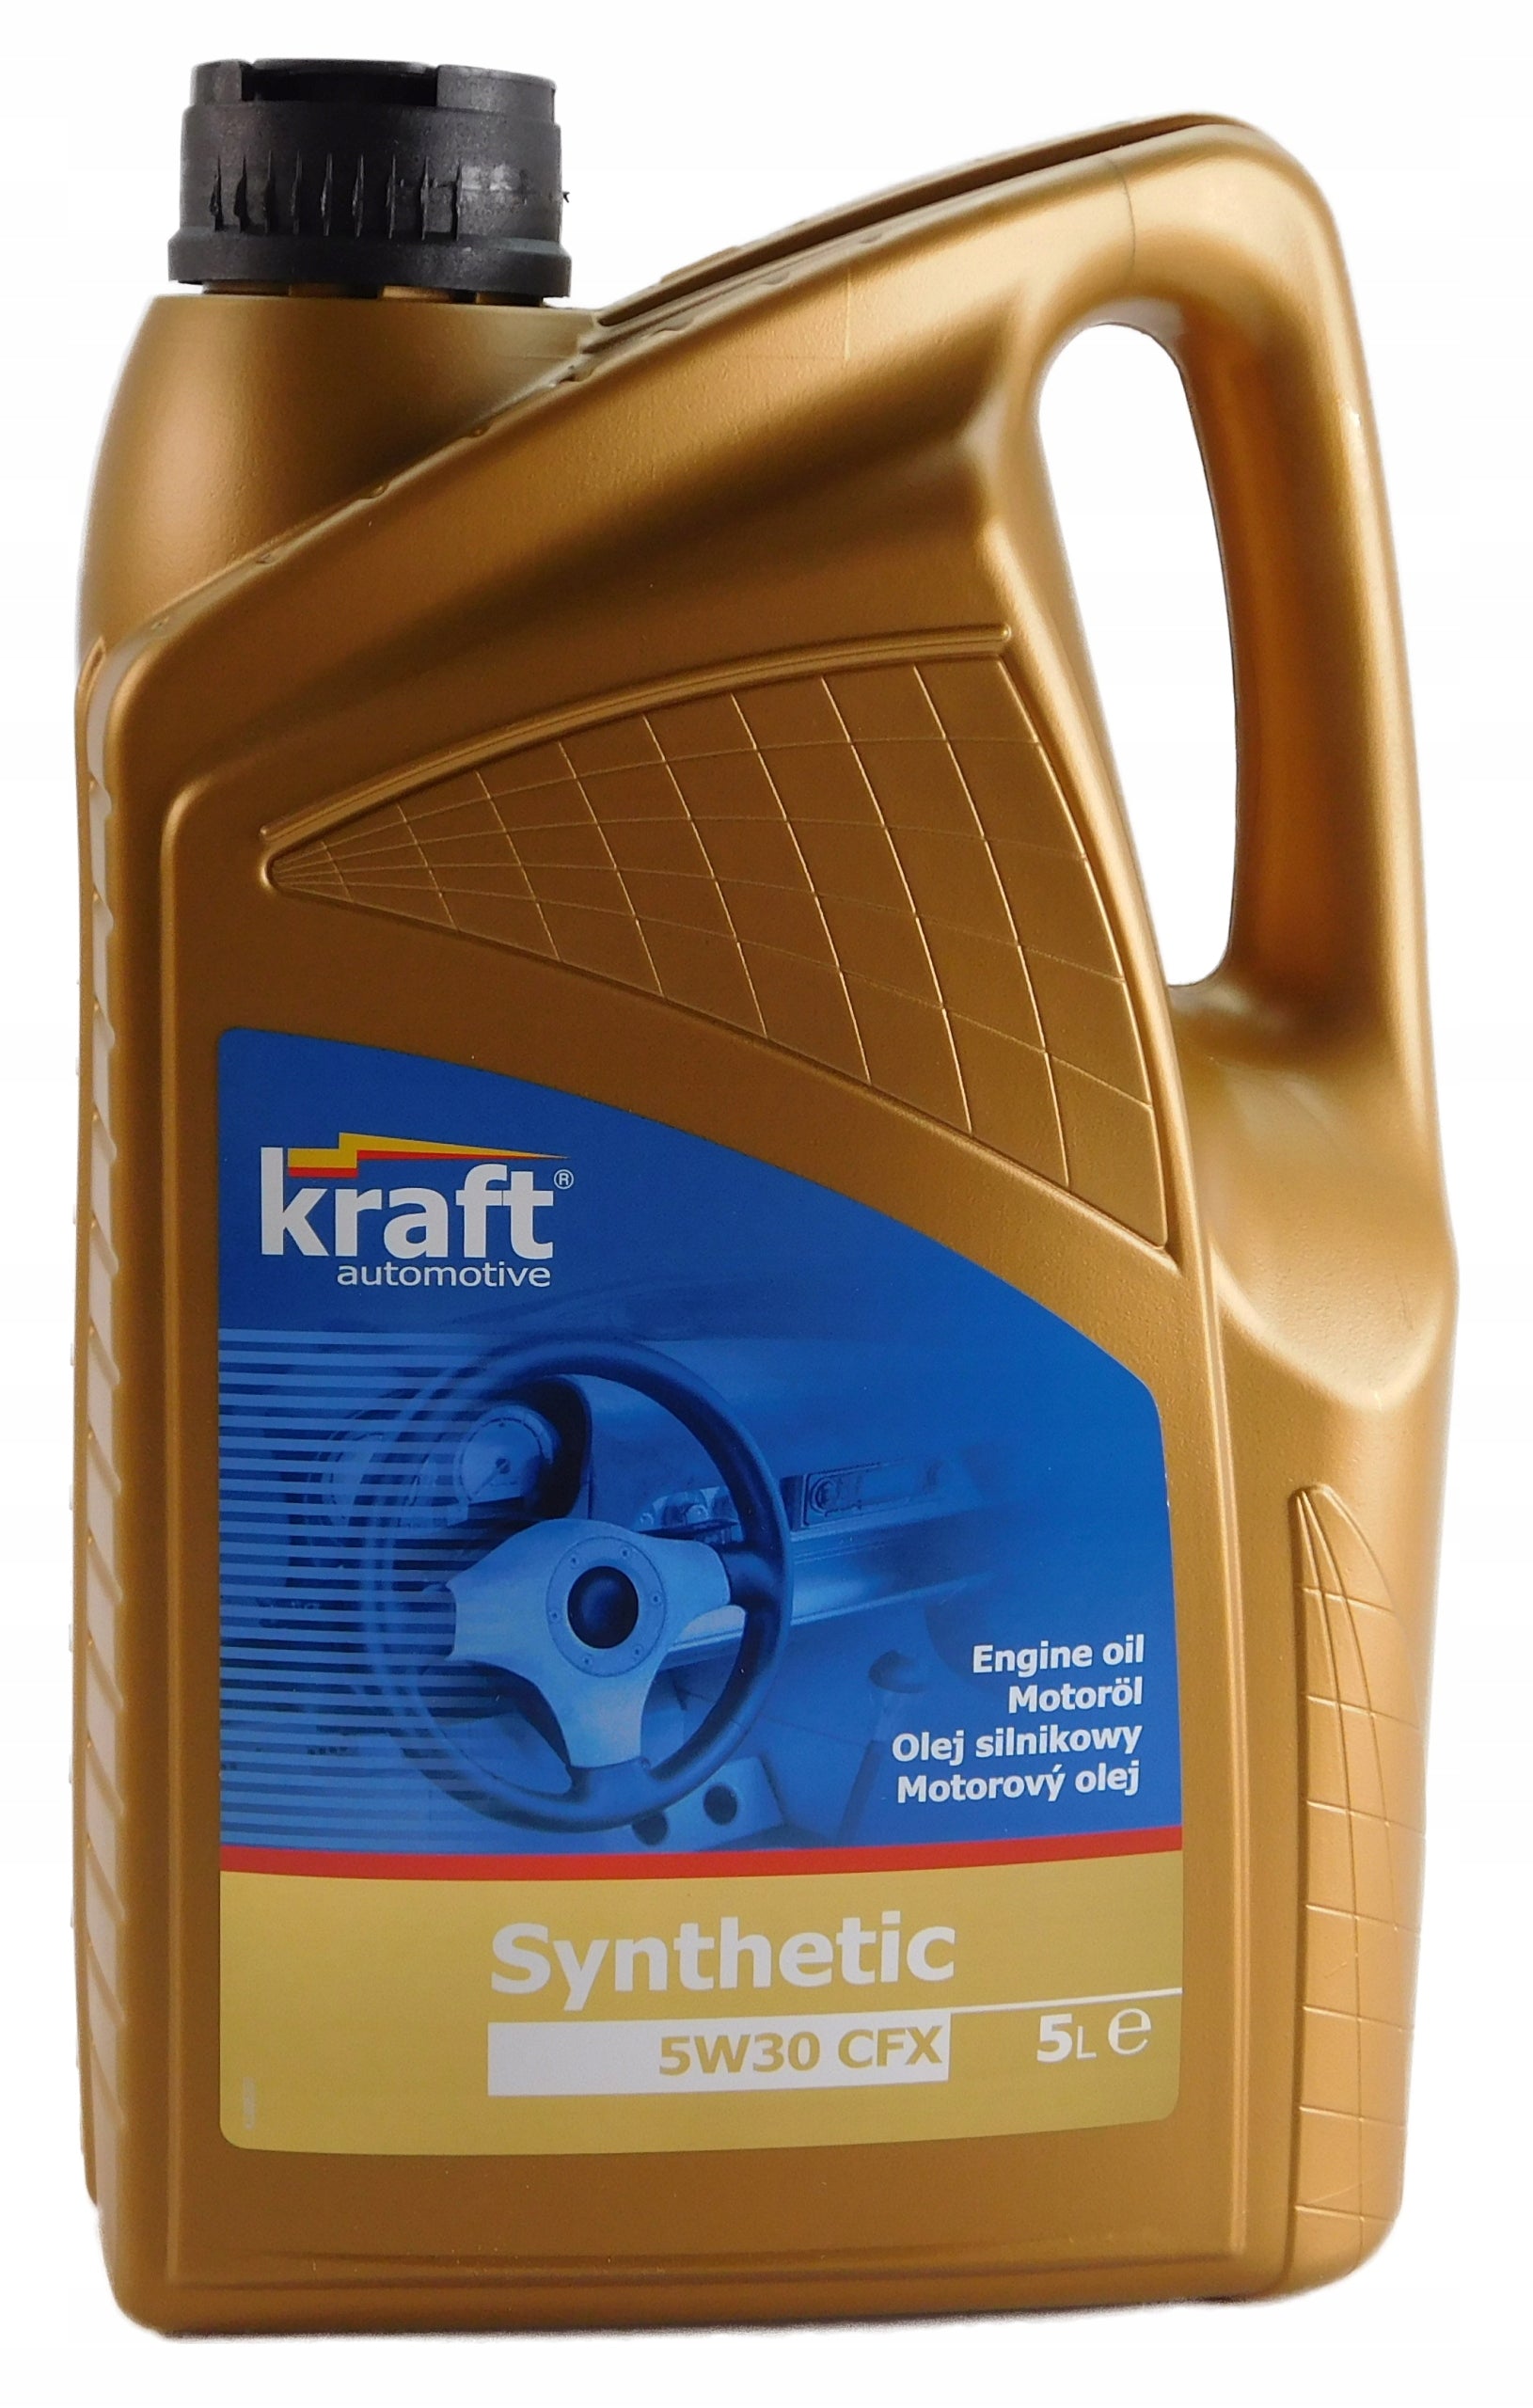 Kraft Syntetisk Olje 5W30 Cfx 5 Liter